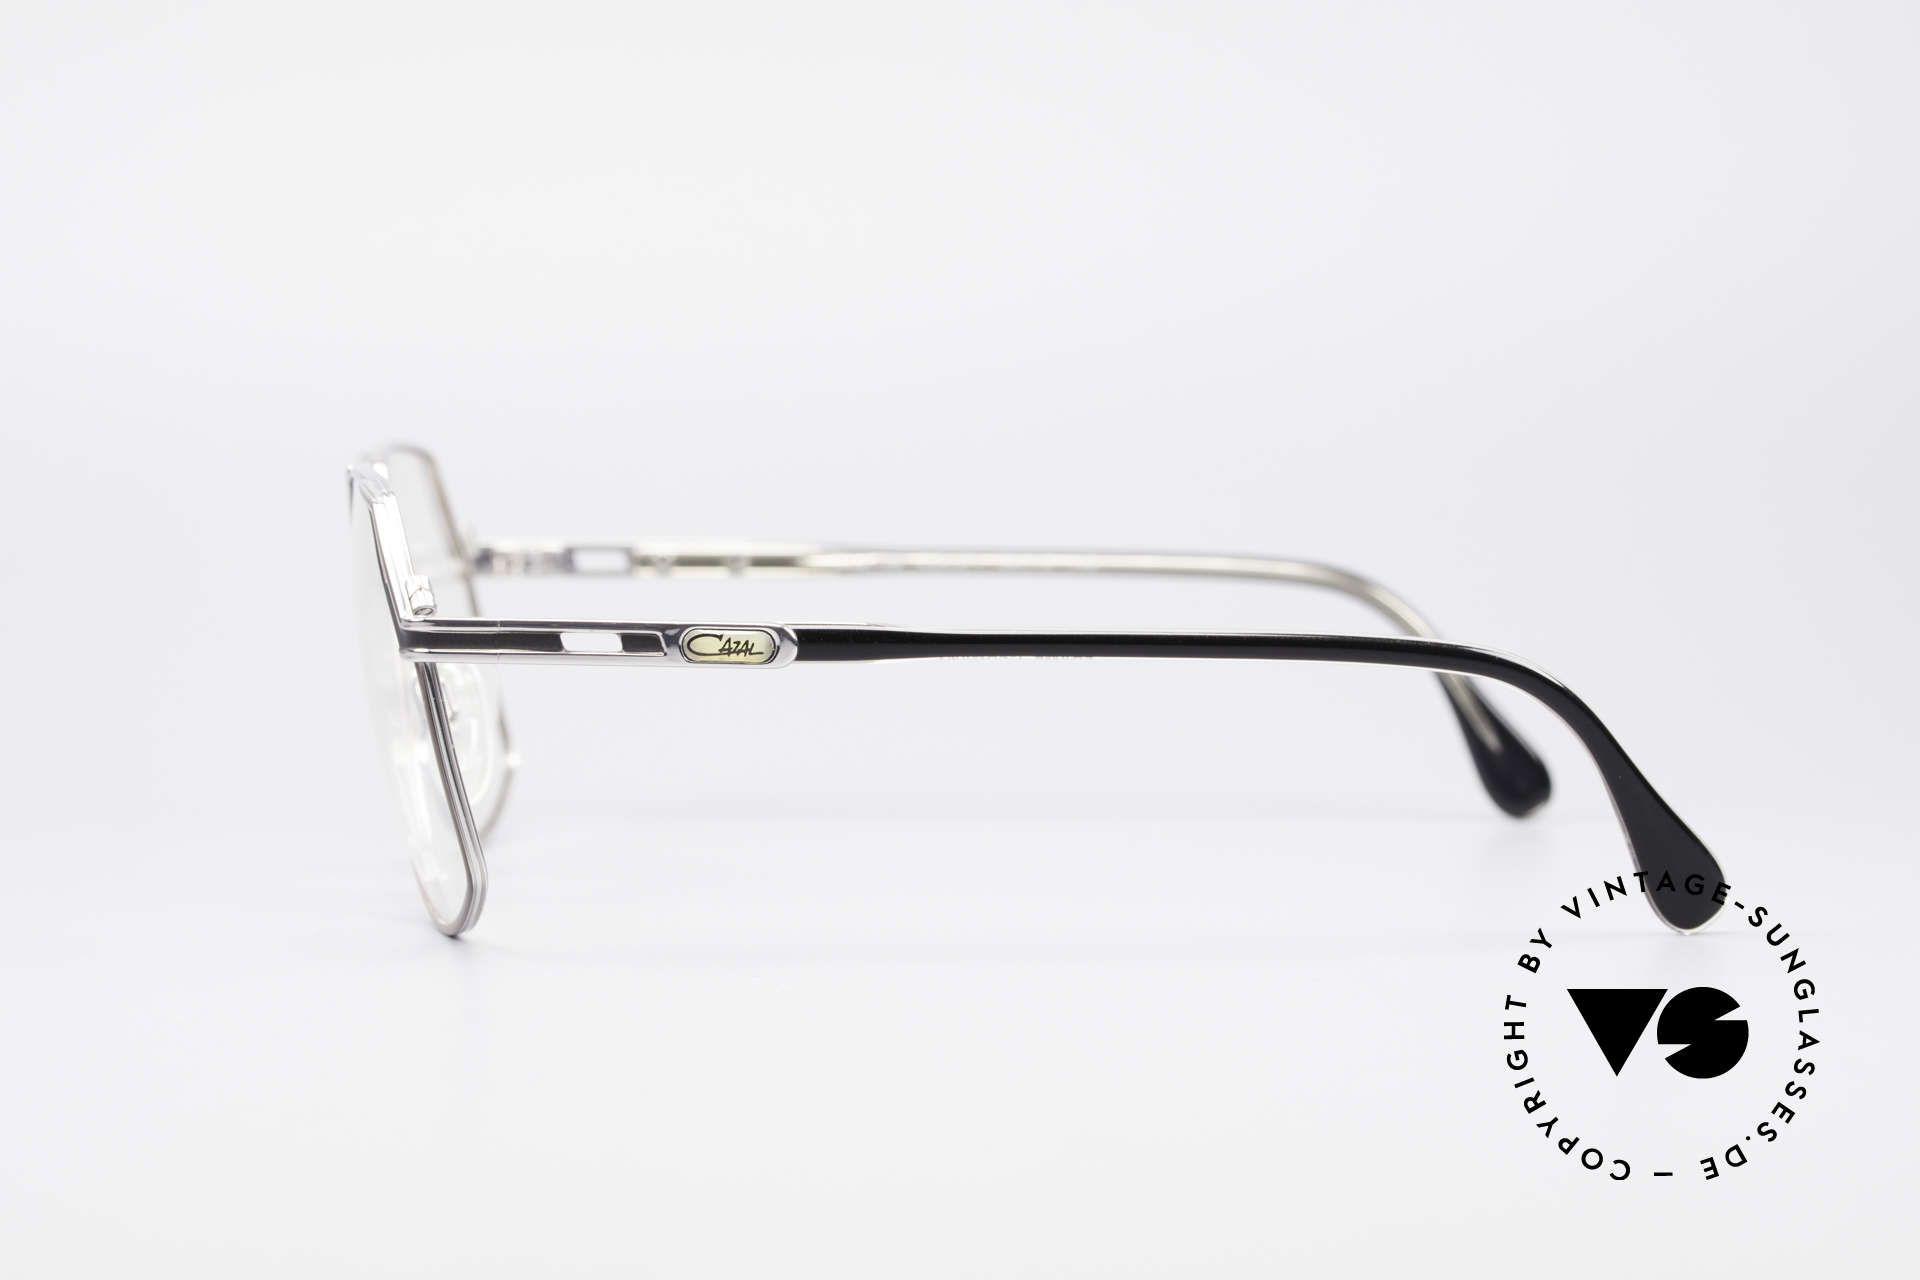 Cazal 738 True Vintage Eyeglasses, Size: medium, Made for Men